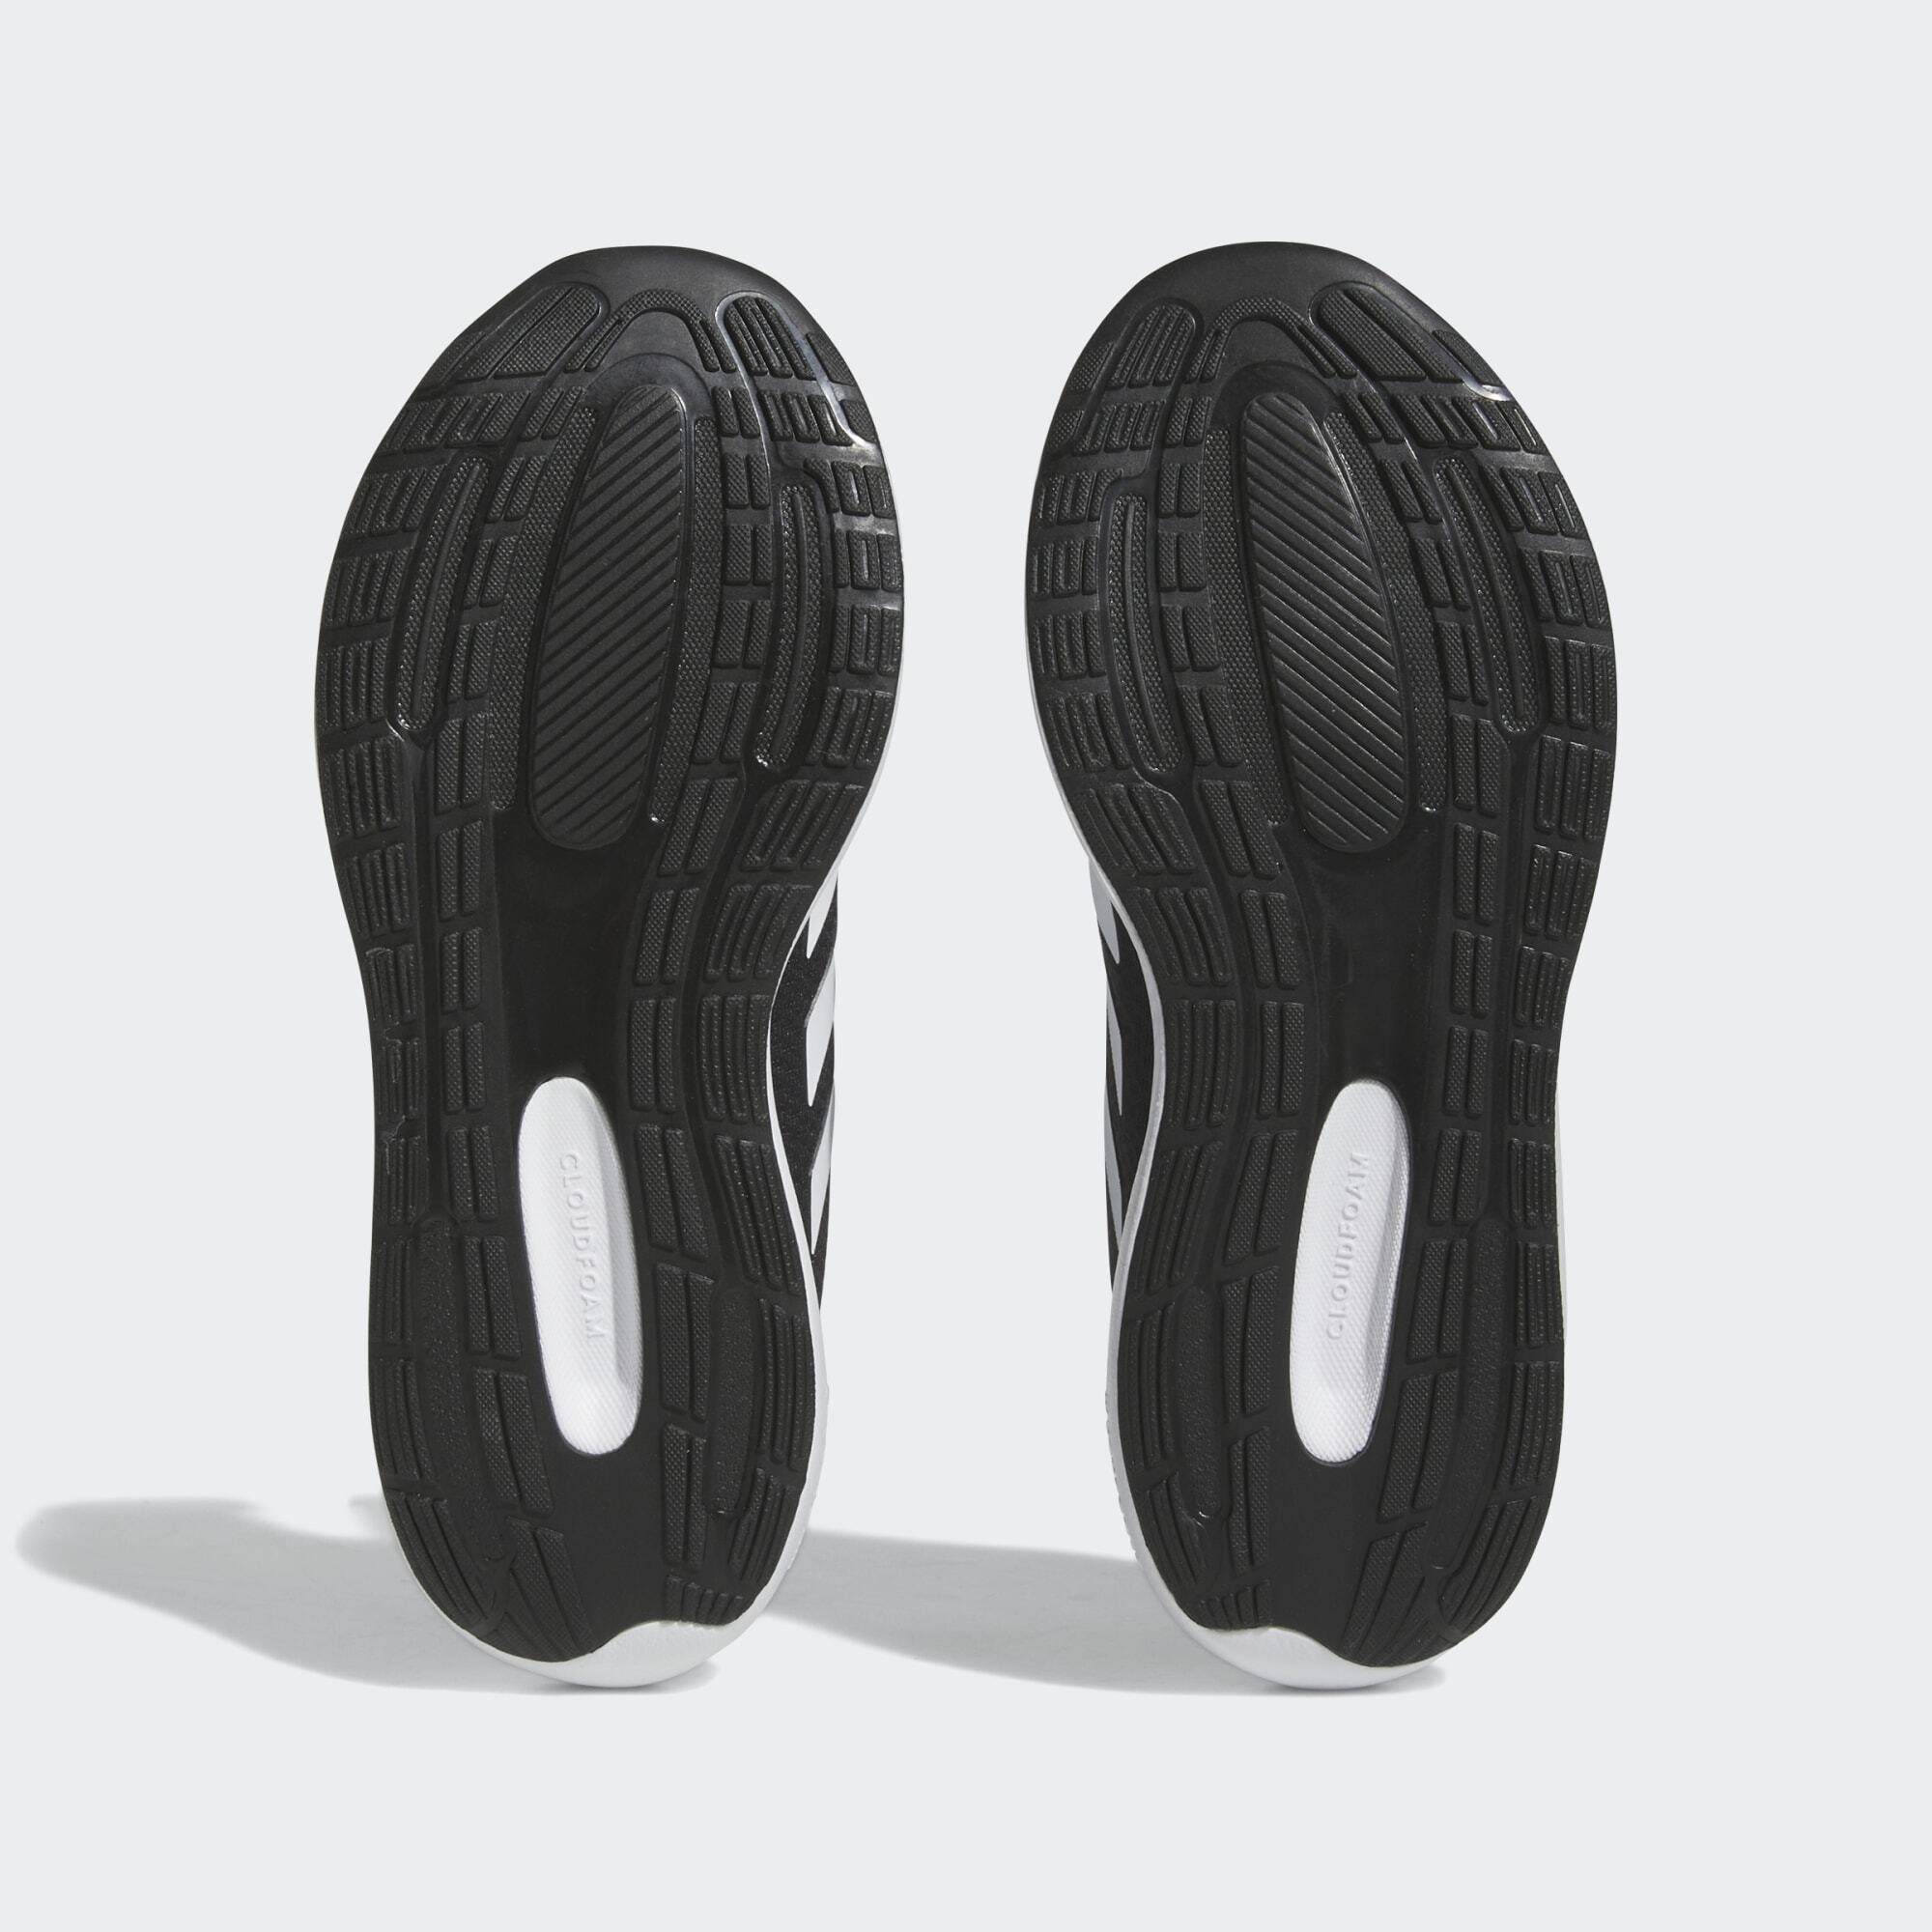 Sportswear 3 Sneaker adidas Black RUNFALCON Core SCHUH LACE Core White Black / / Cloud